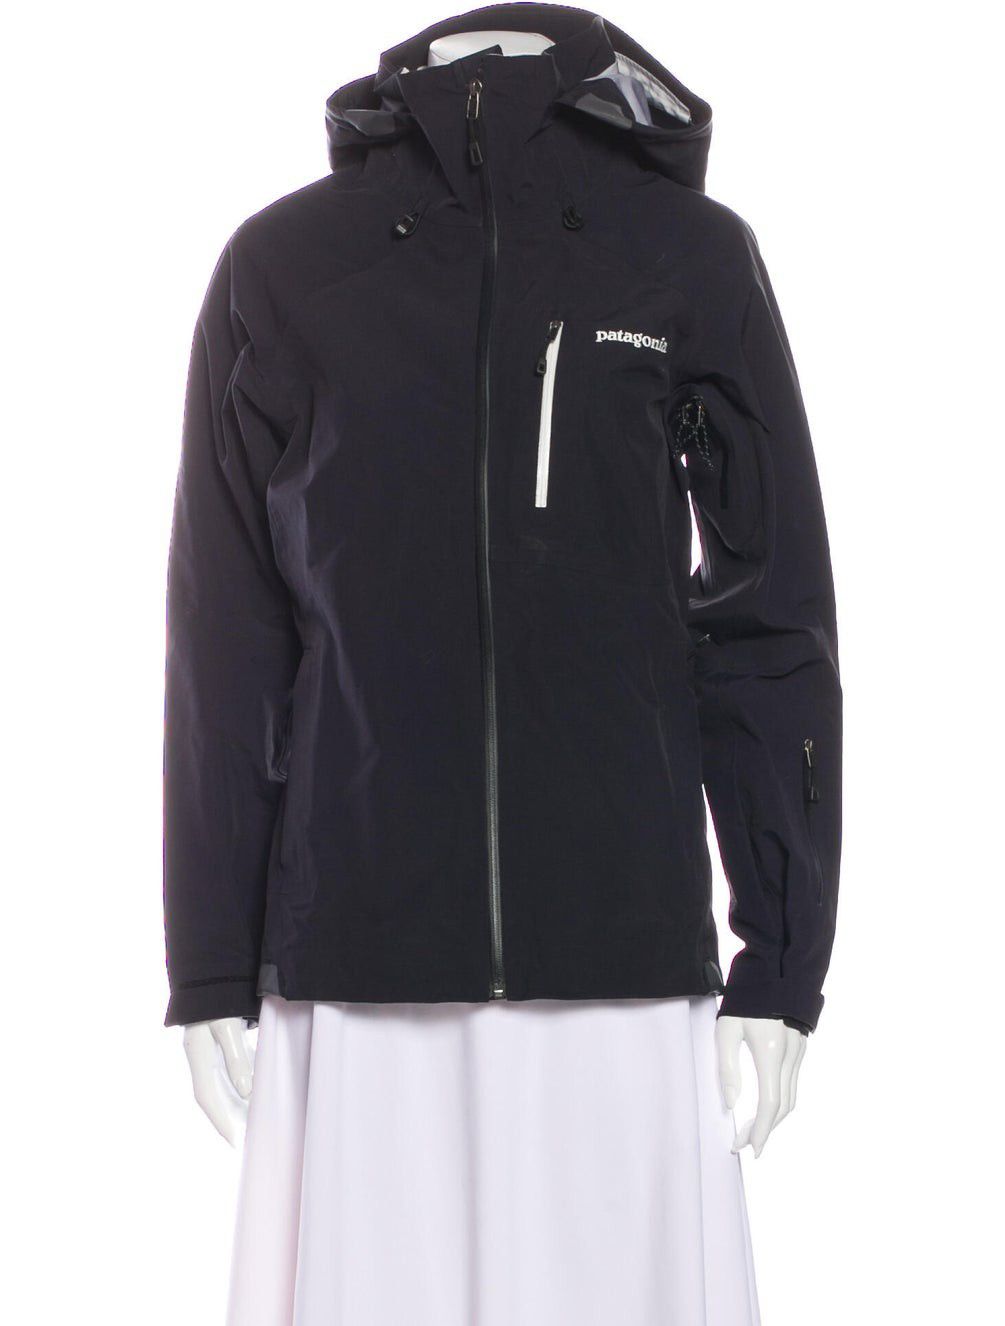 Patagonia Primo Shell Gore-tex 3 Layer Jacket Women's Size XS